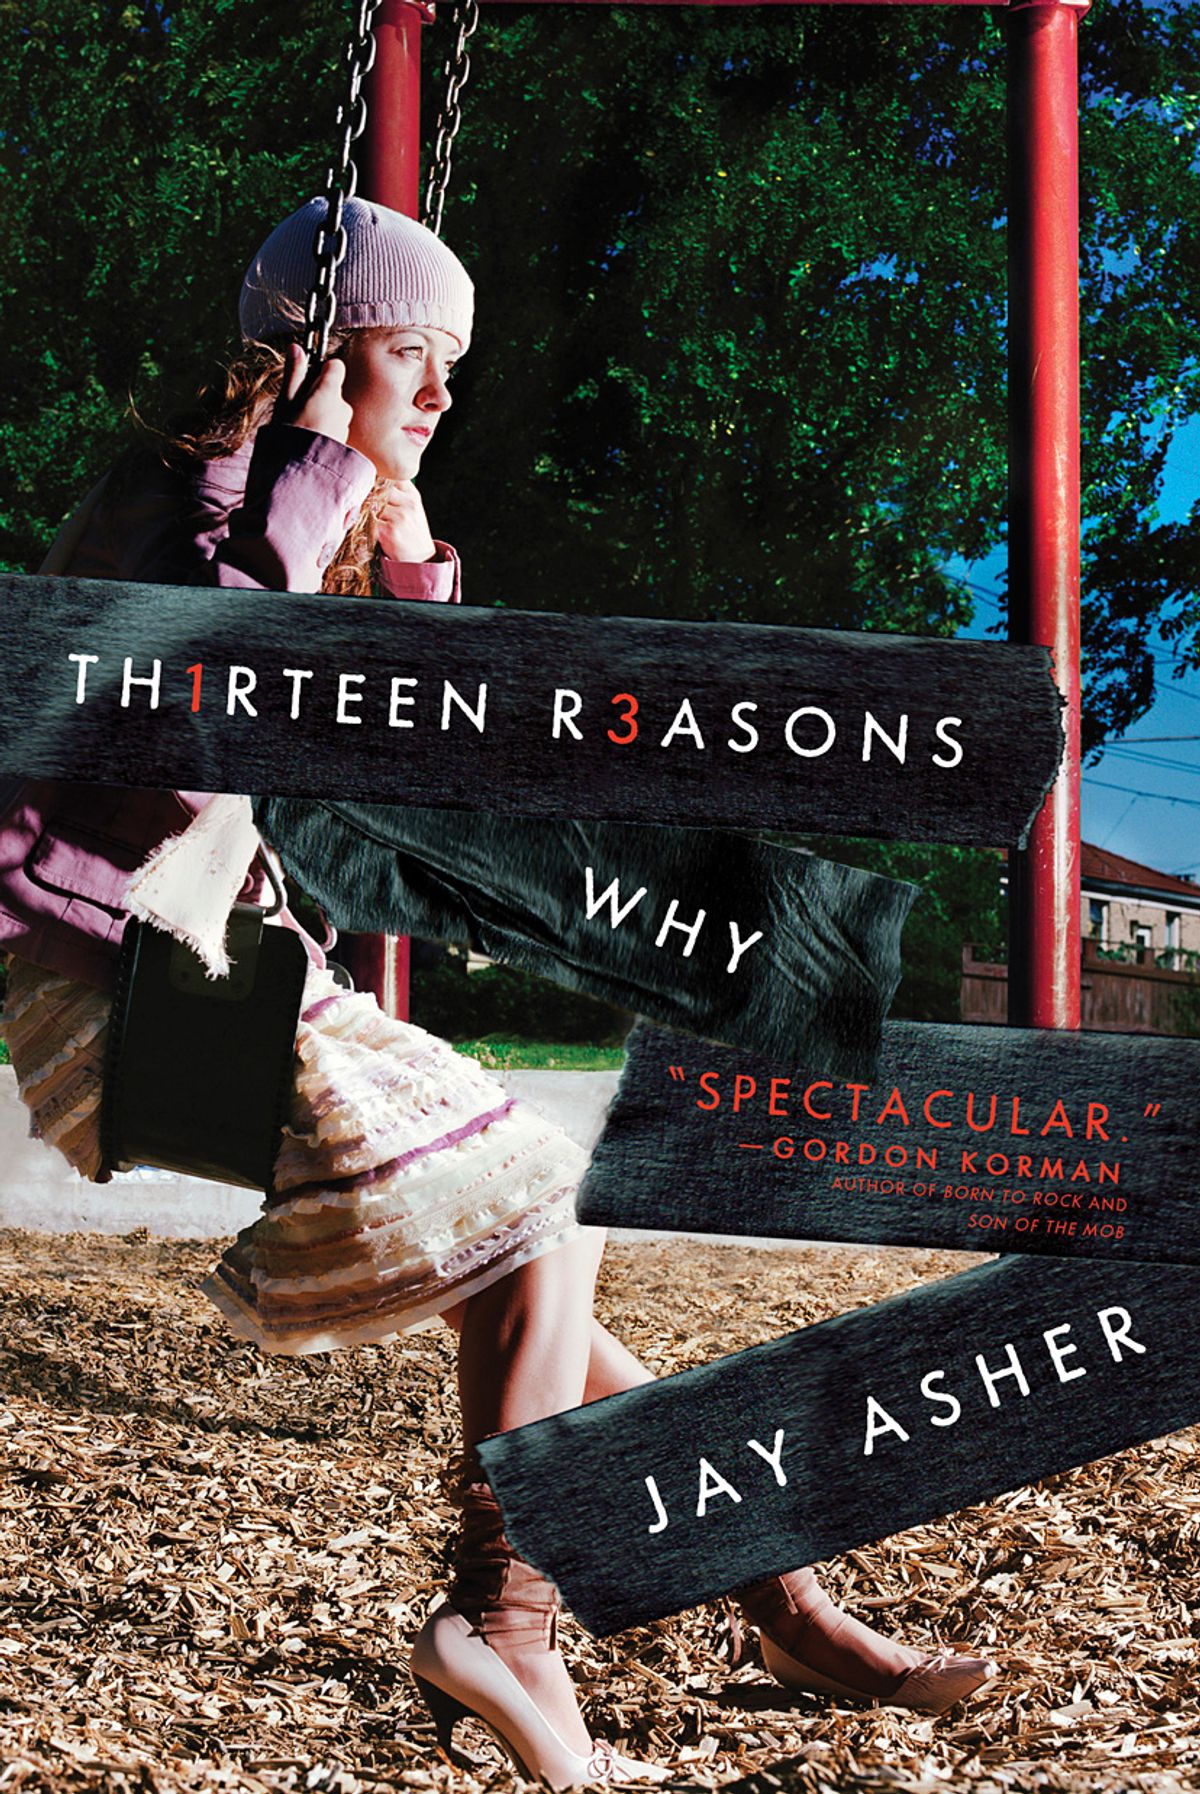 13 Reasons Why Everyone Should Read The Novel "Thirteen Reasons Why"